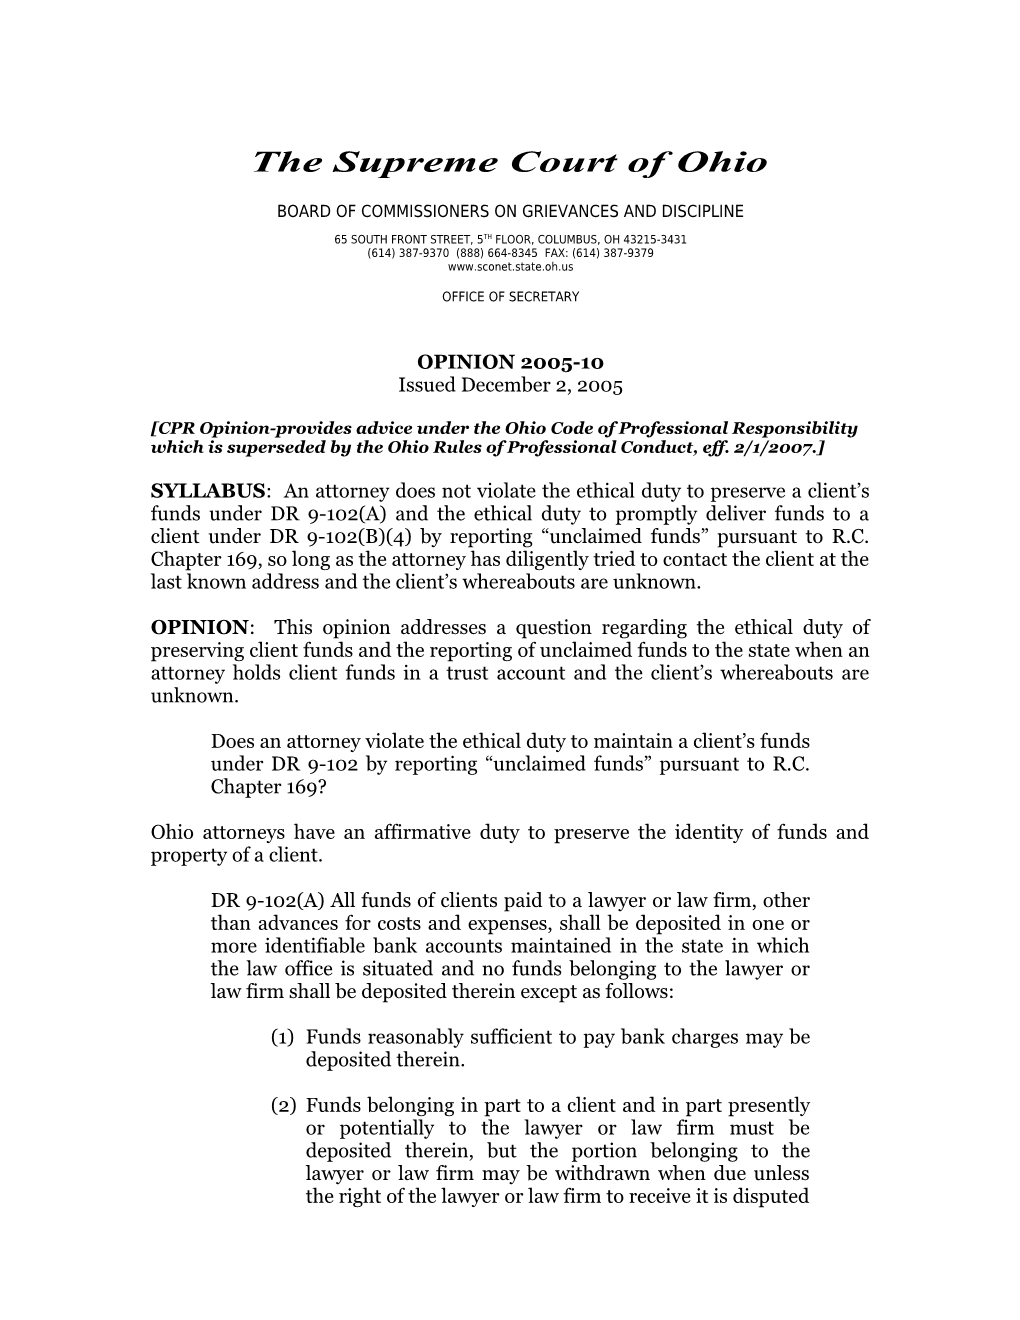 The Supreme Court of Ohio s5